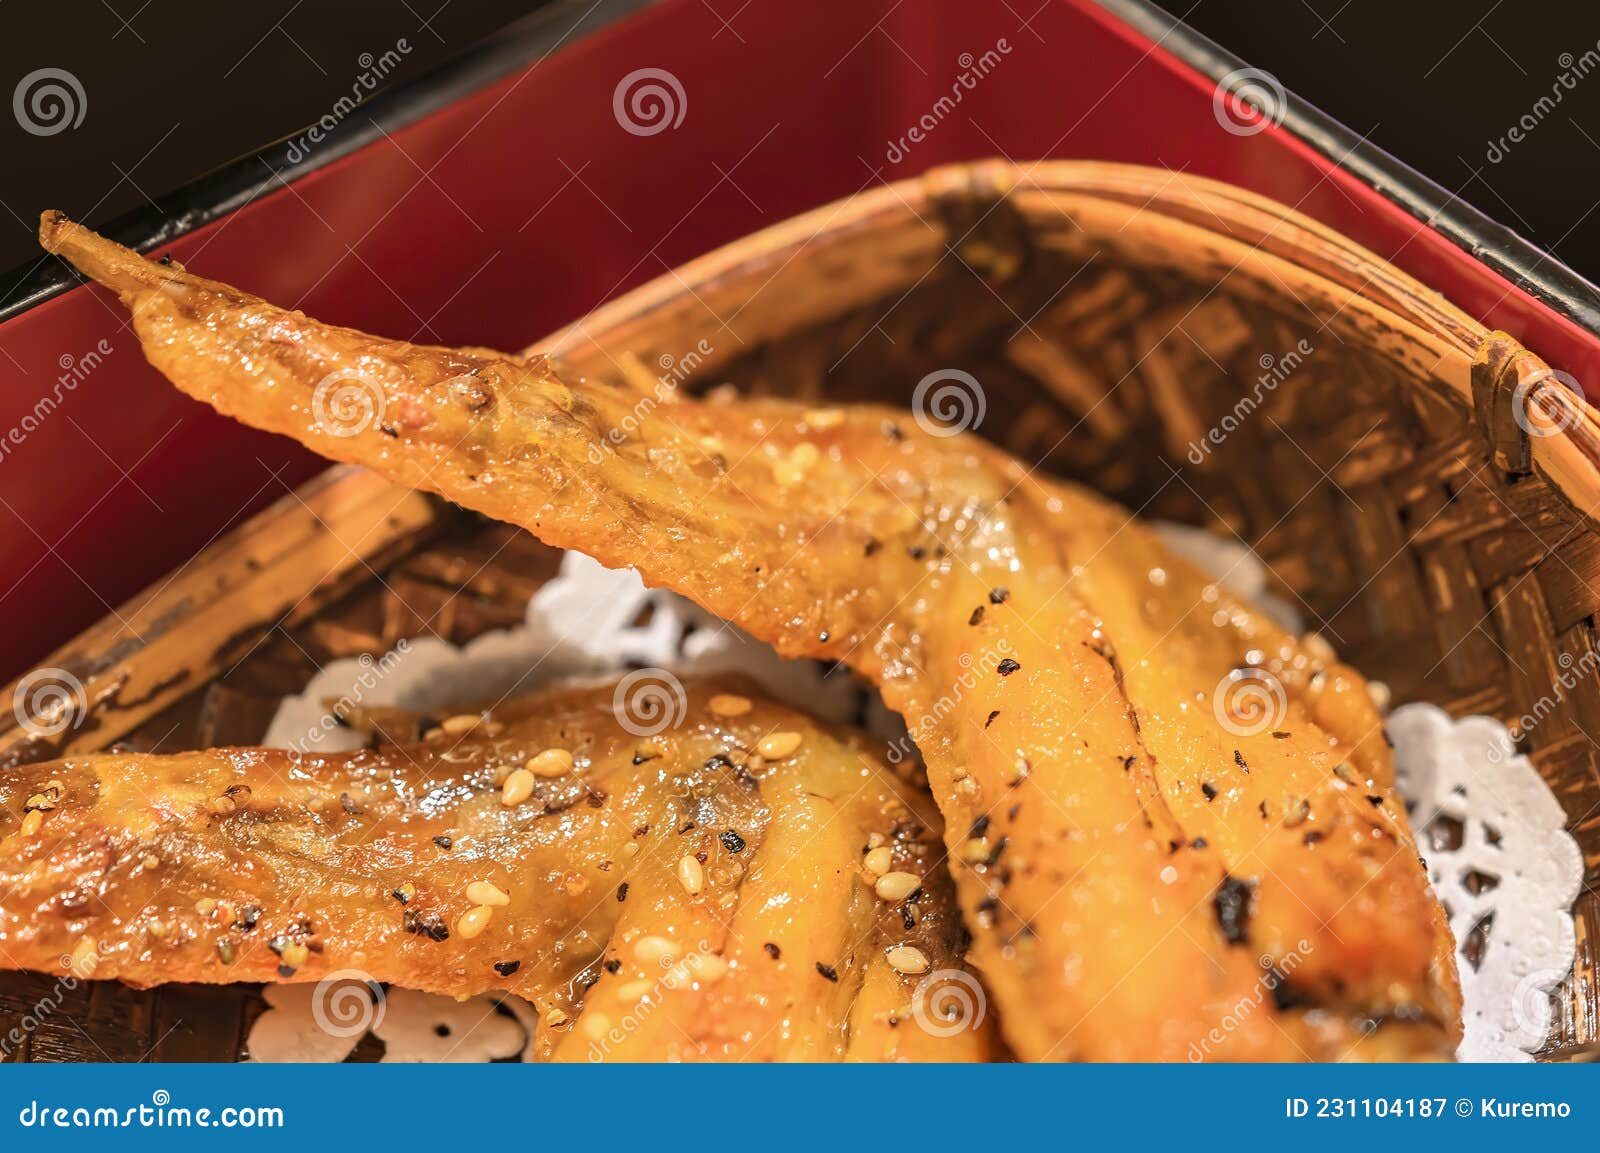 japanese deep fried chicken wings called tebasaki serving in a temi woven bamboo winnowing basket.